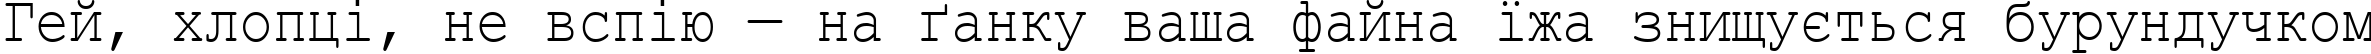 Пример написания шрифтом Courier New Cyr_85n текста на украинском